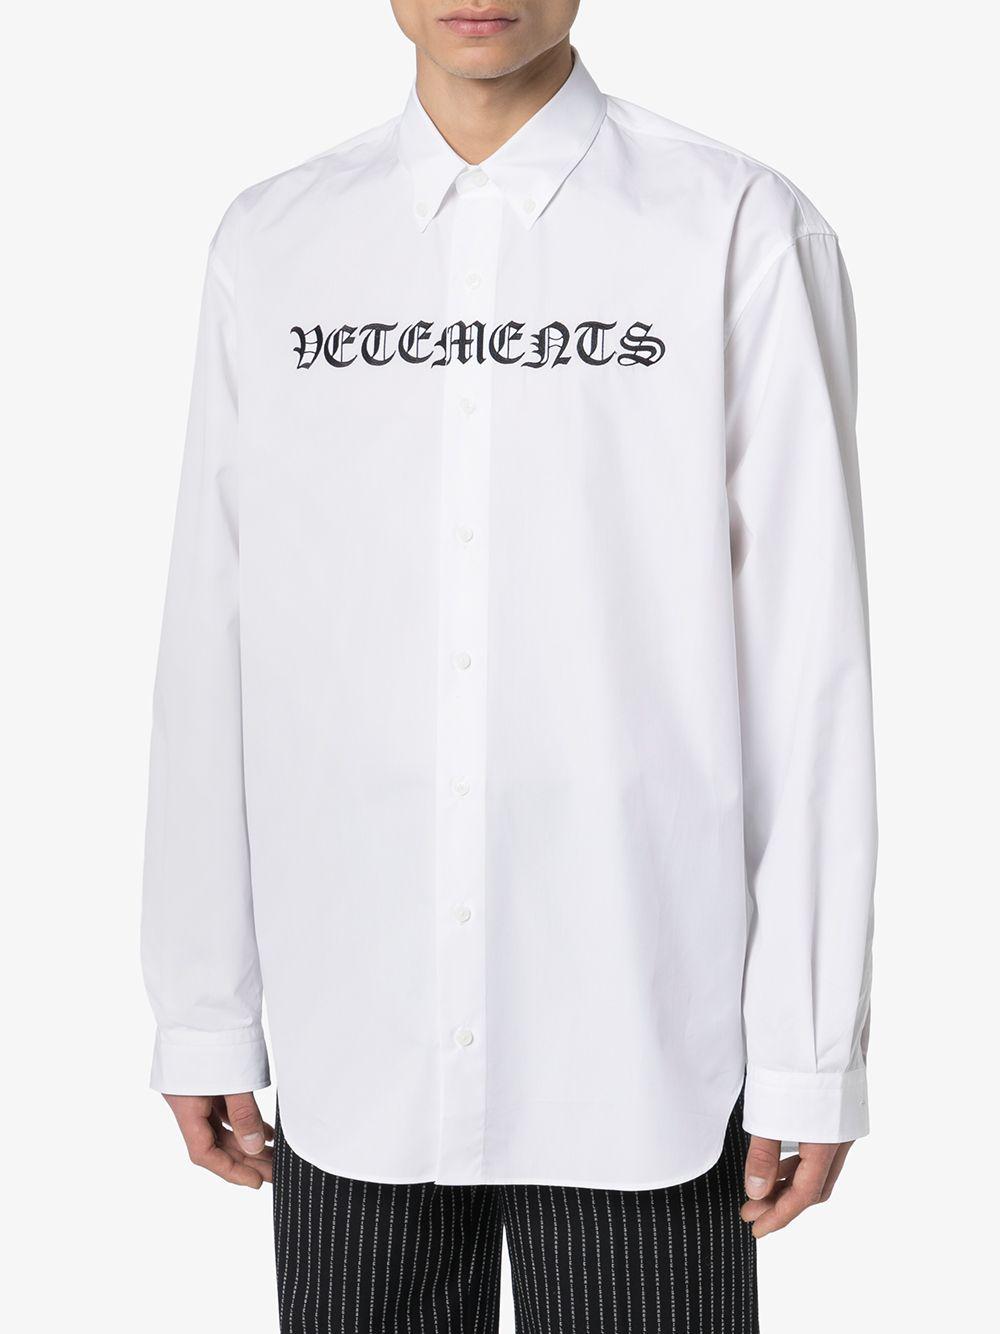 Vetements Gothic Logo Print Shirt in White for Men - Lyst